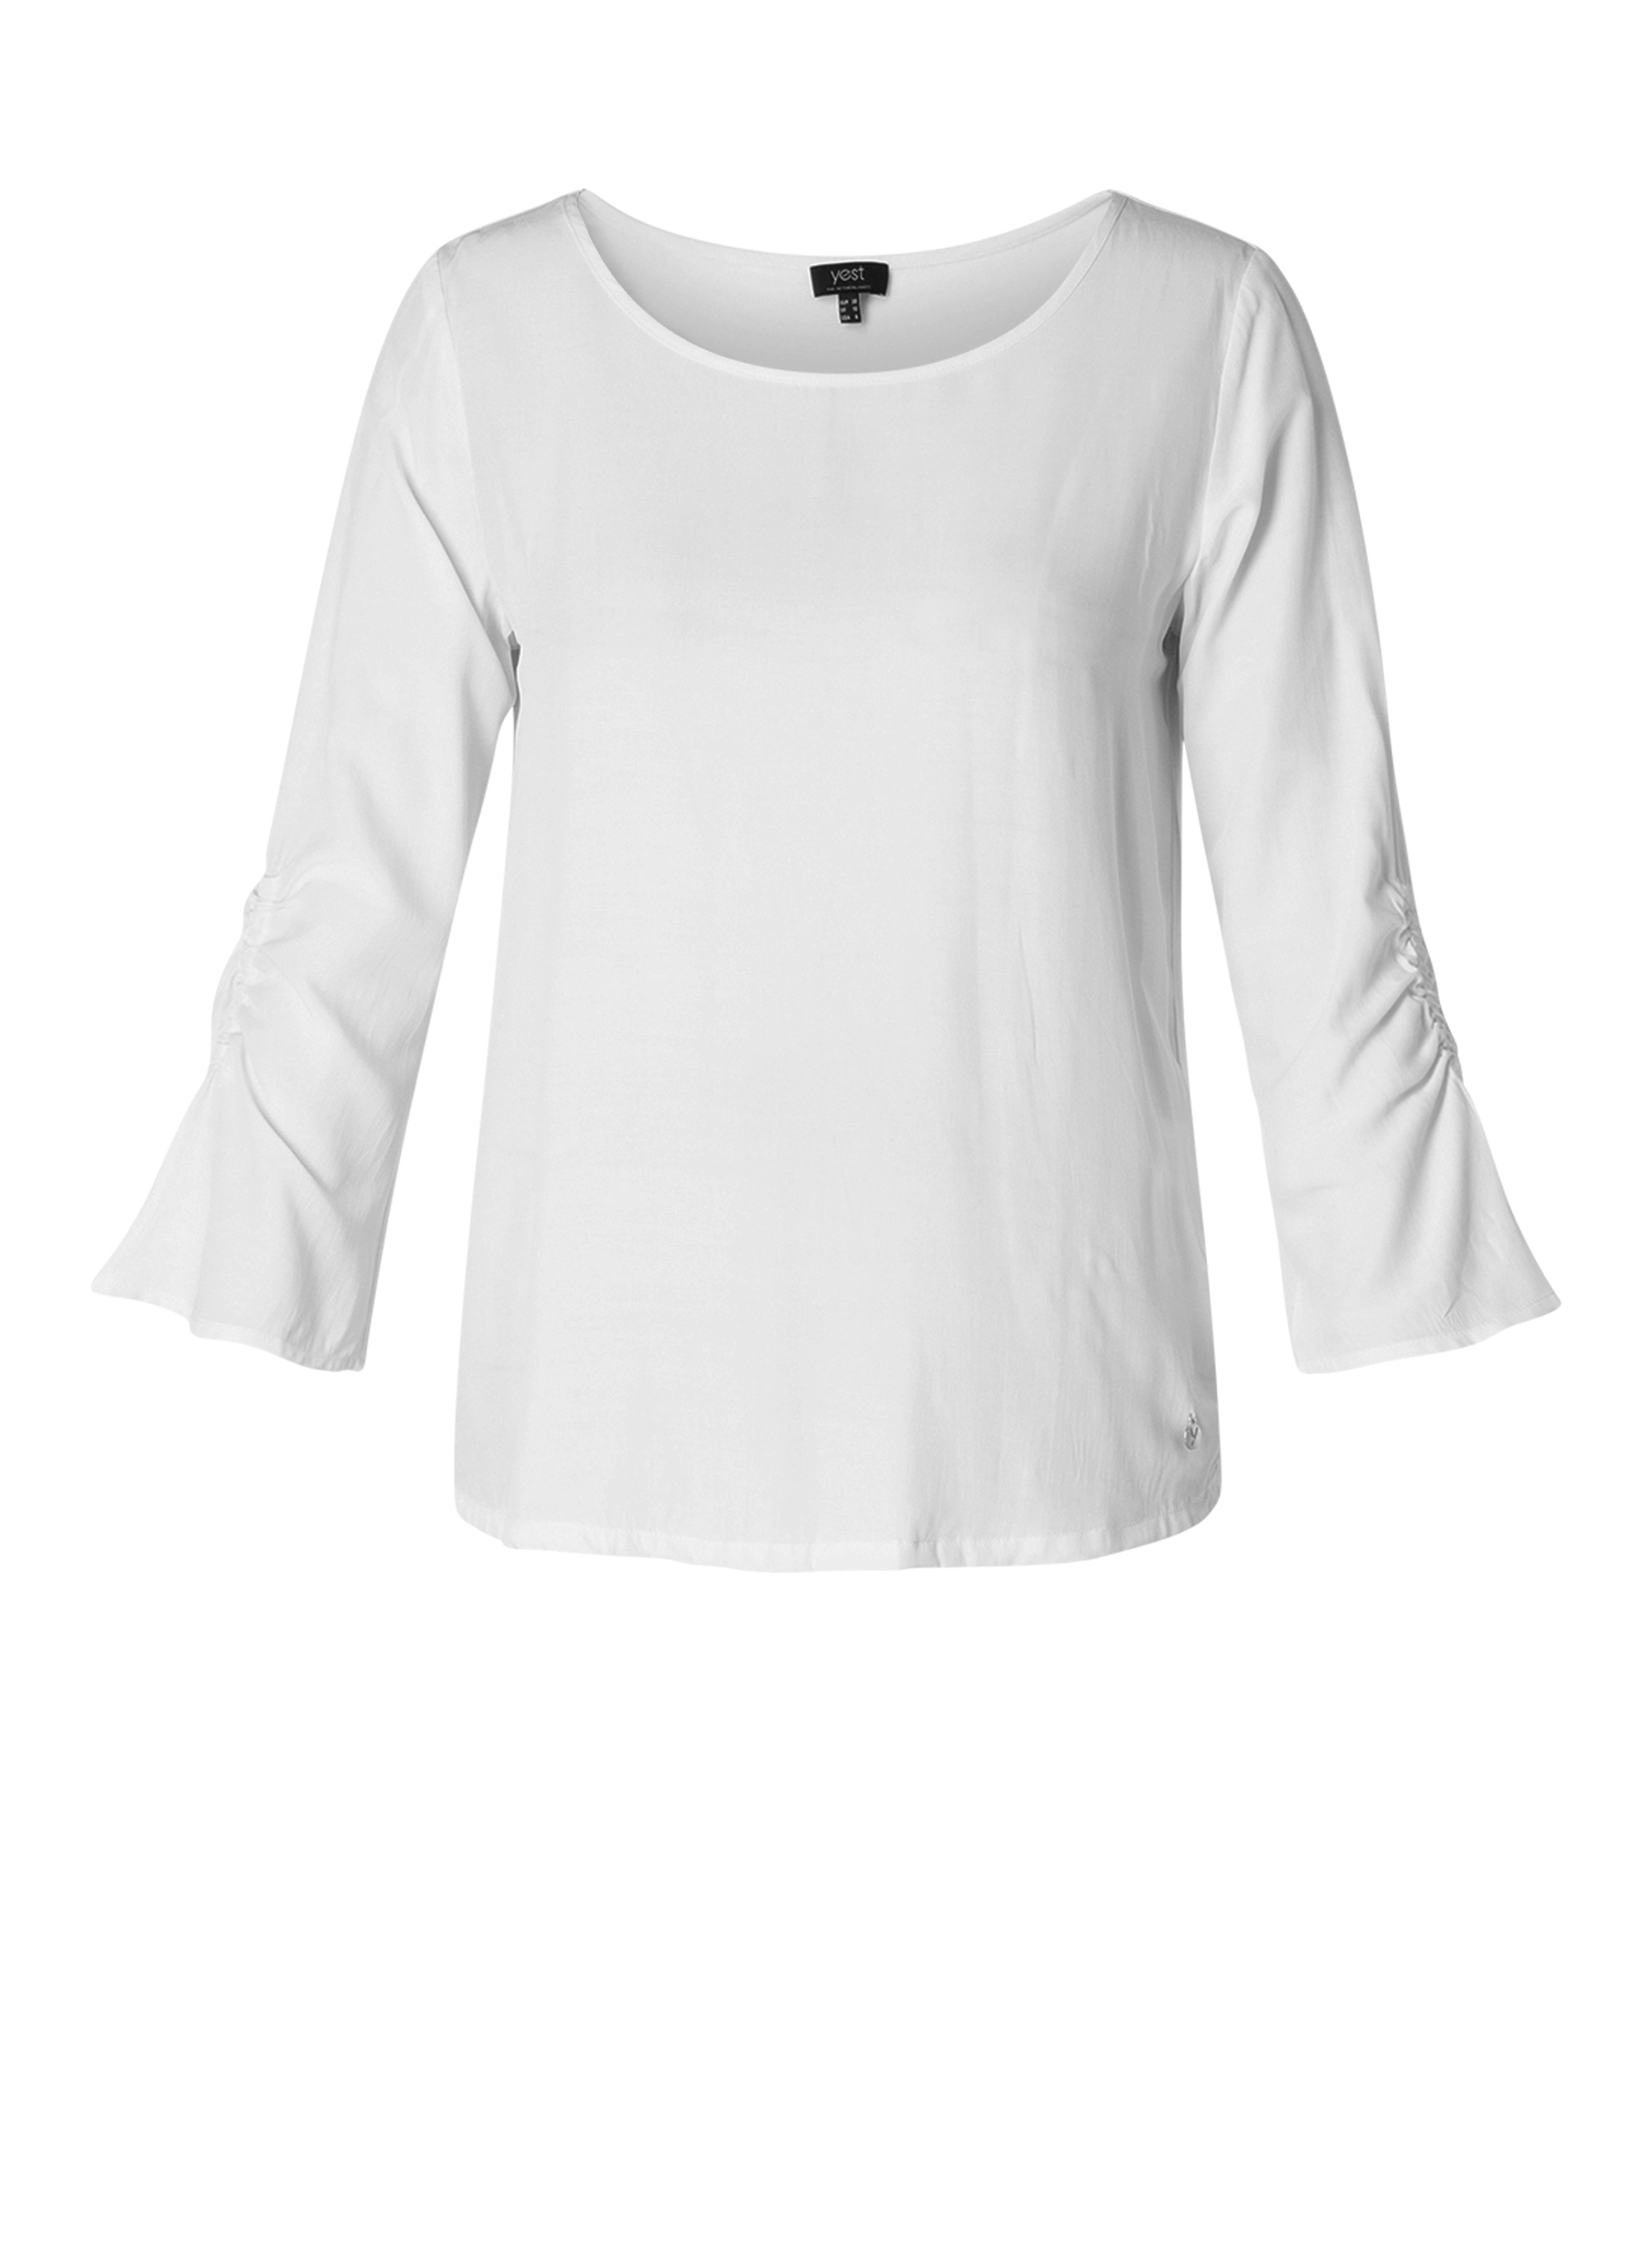 Yest blouse Irena 65 cm